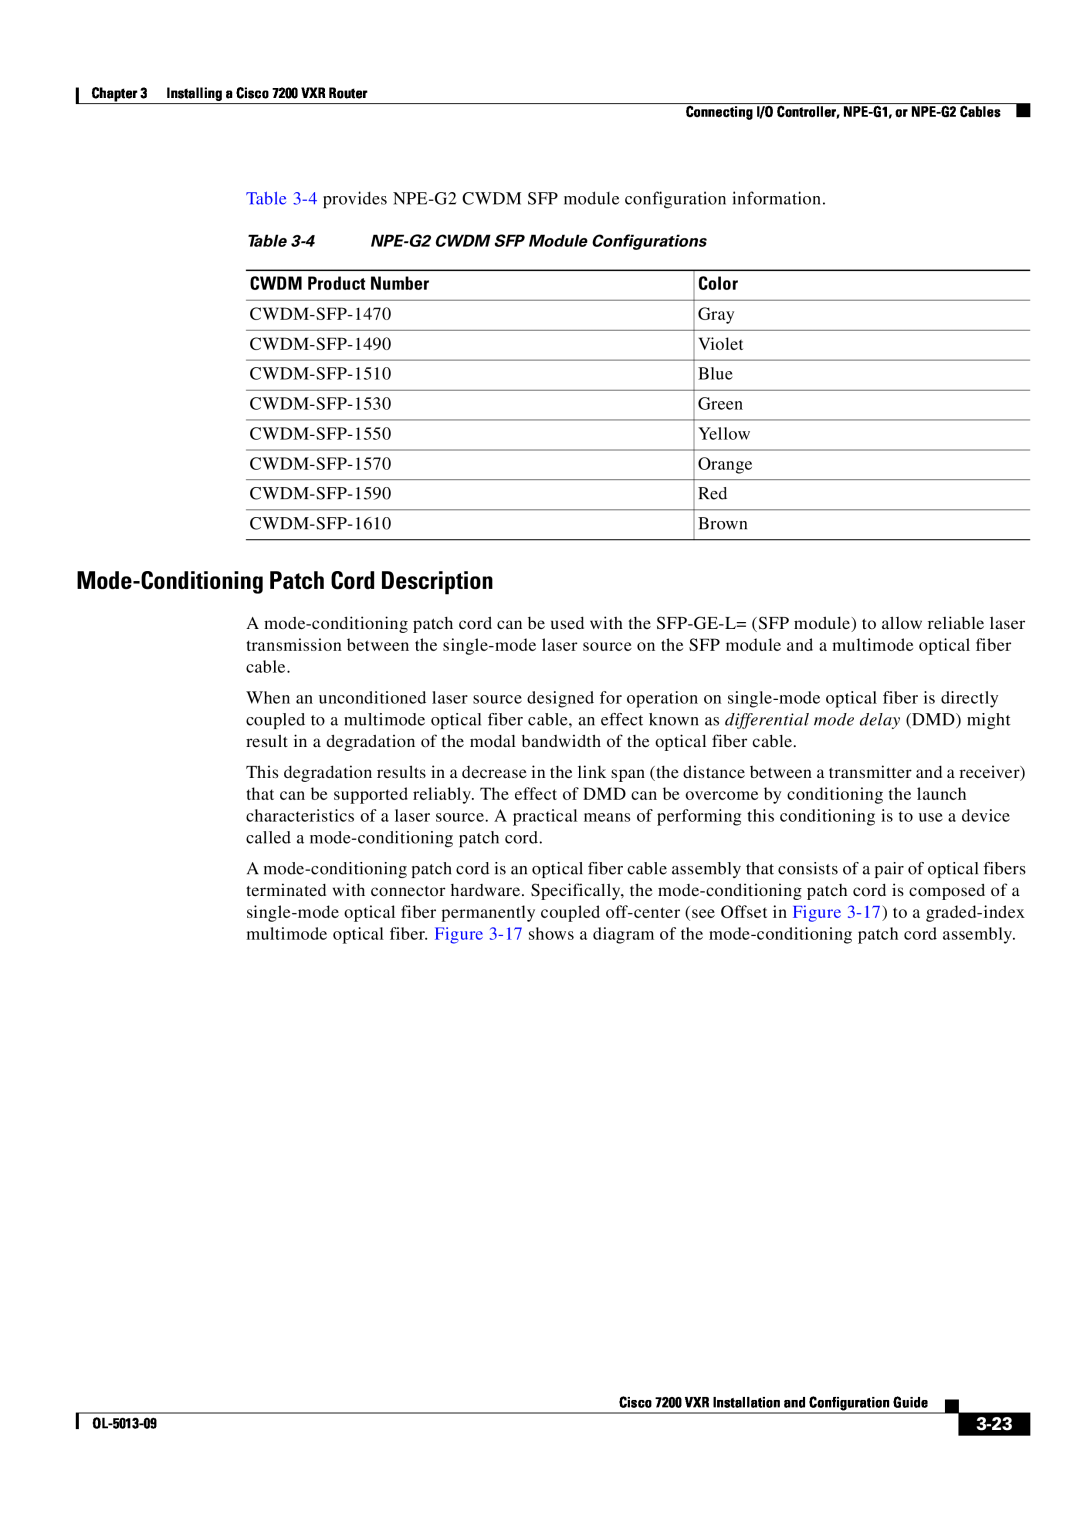 Cisco Systems 7200 VXR manual Mode-Conditioning Patch Cord Description, 3-23, NPE-G2 CWDM SFP Module Configurations 